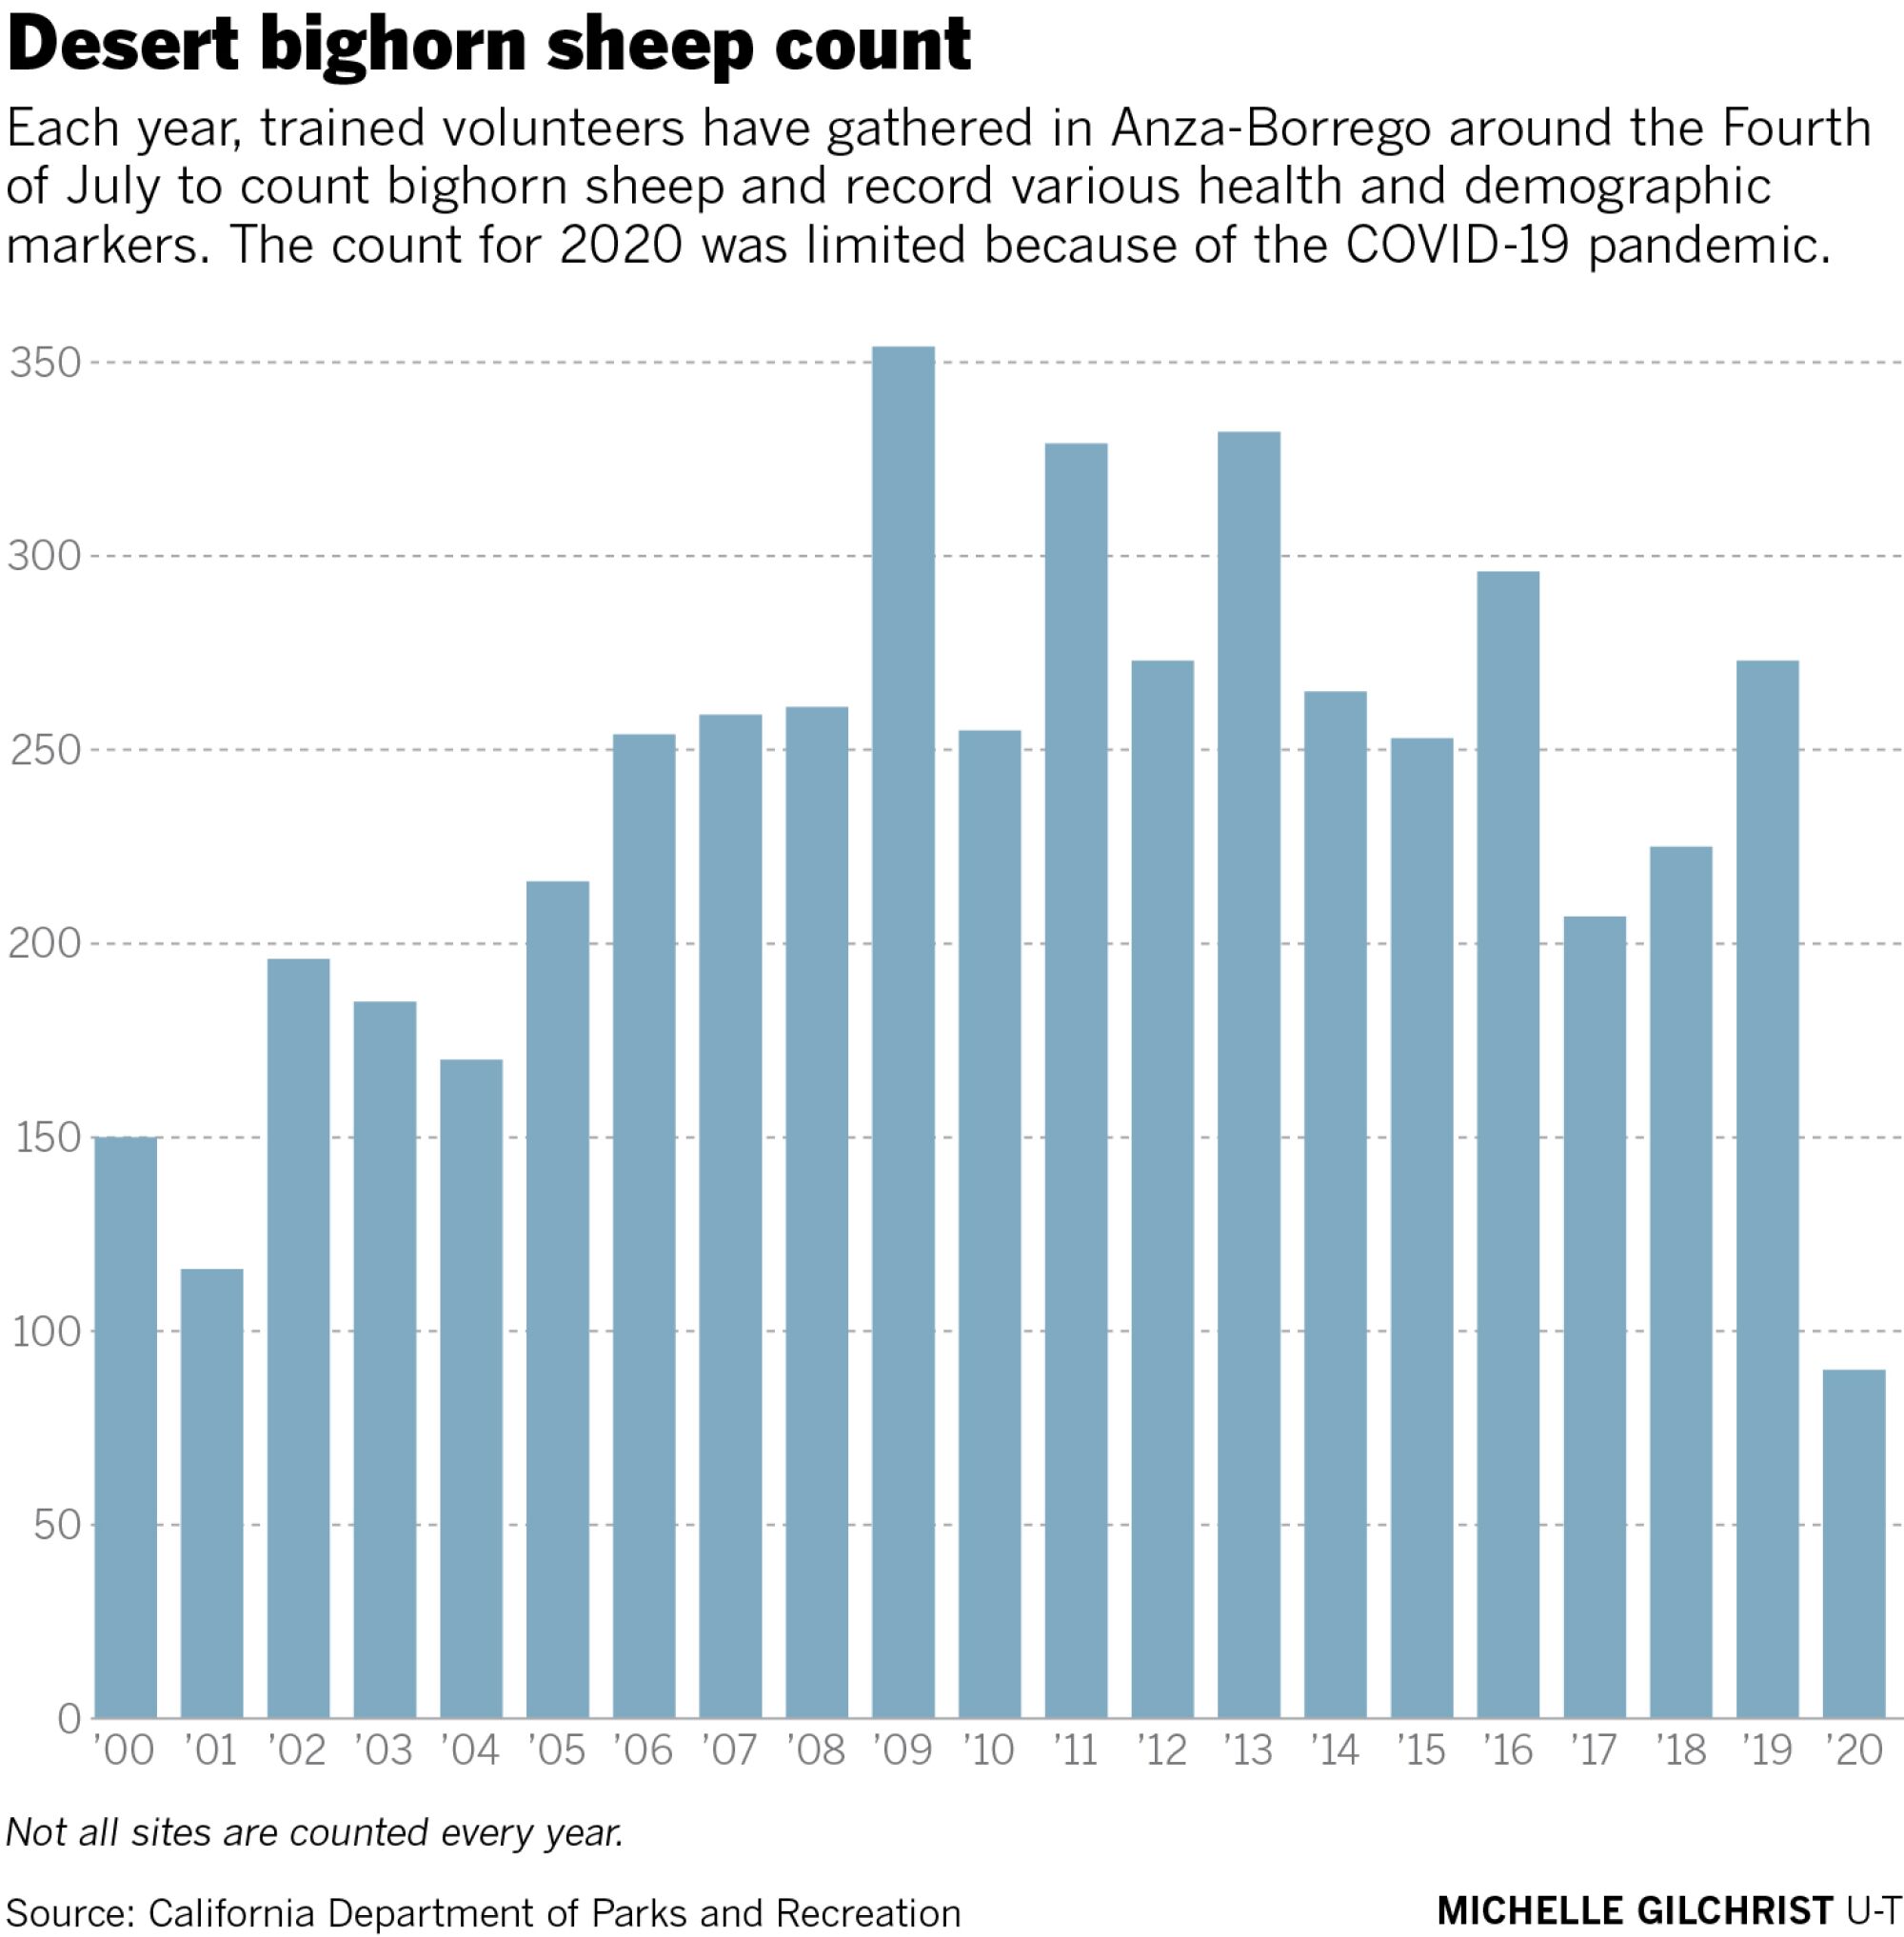 Chart showing desert bighorn sheep count beginning in 2000